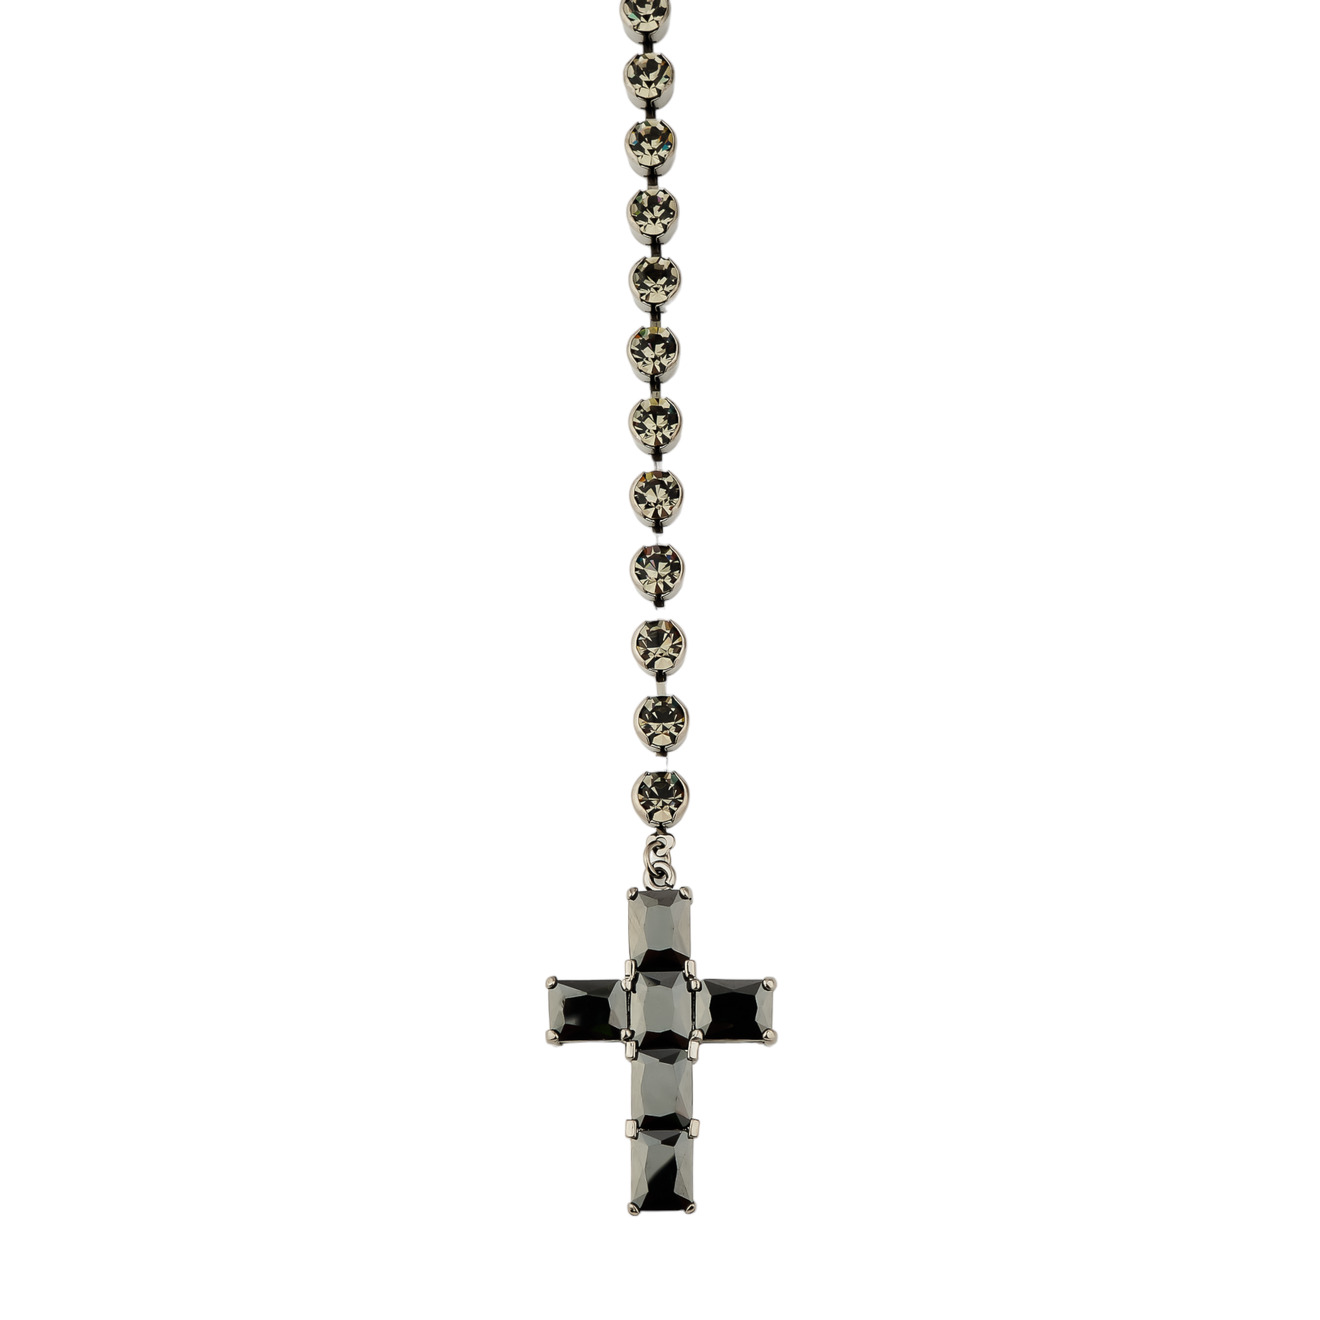 Herald Percy Сотуар с кристаллами и подвеской крестом черного цвета herald percy золотистый сотуар с кристаллами и подвеской крестом